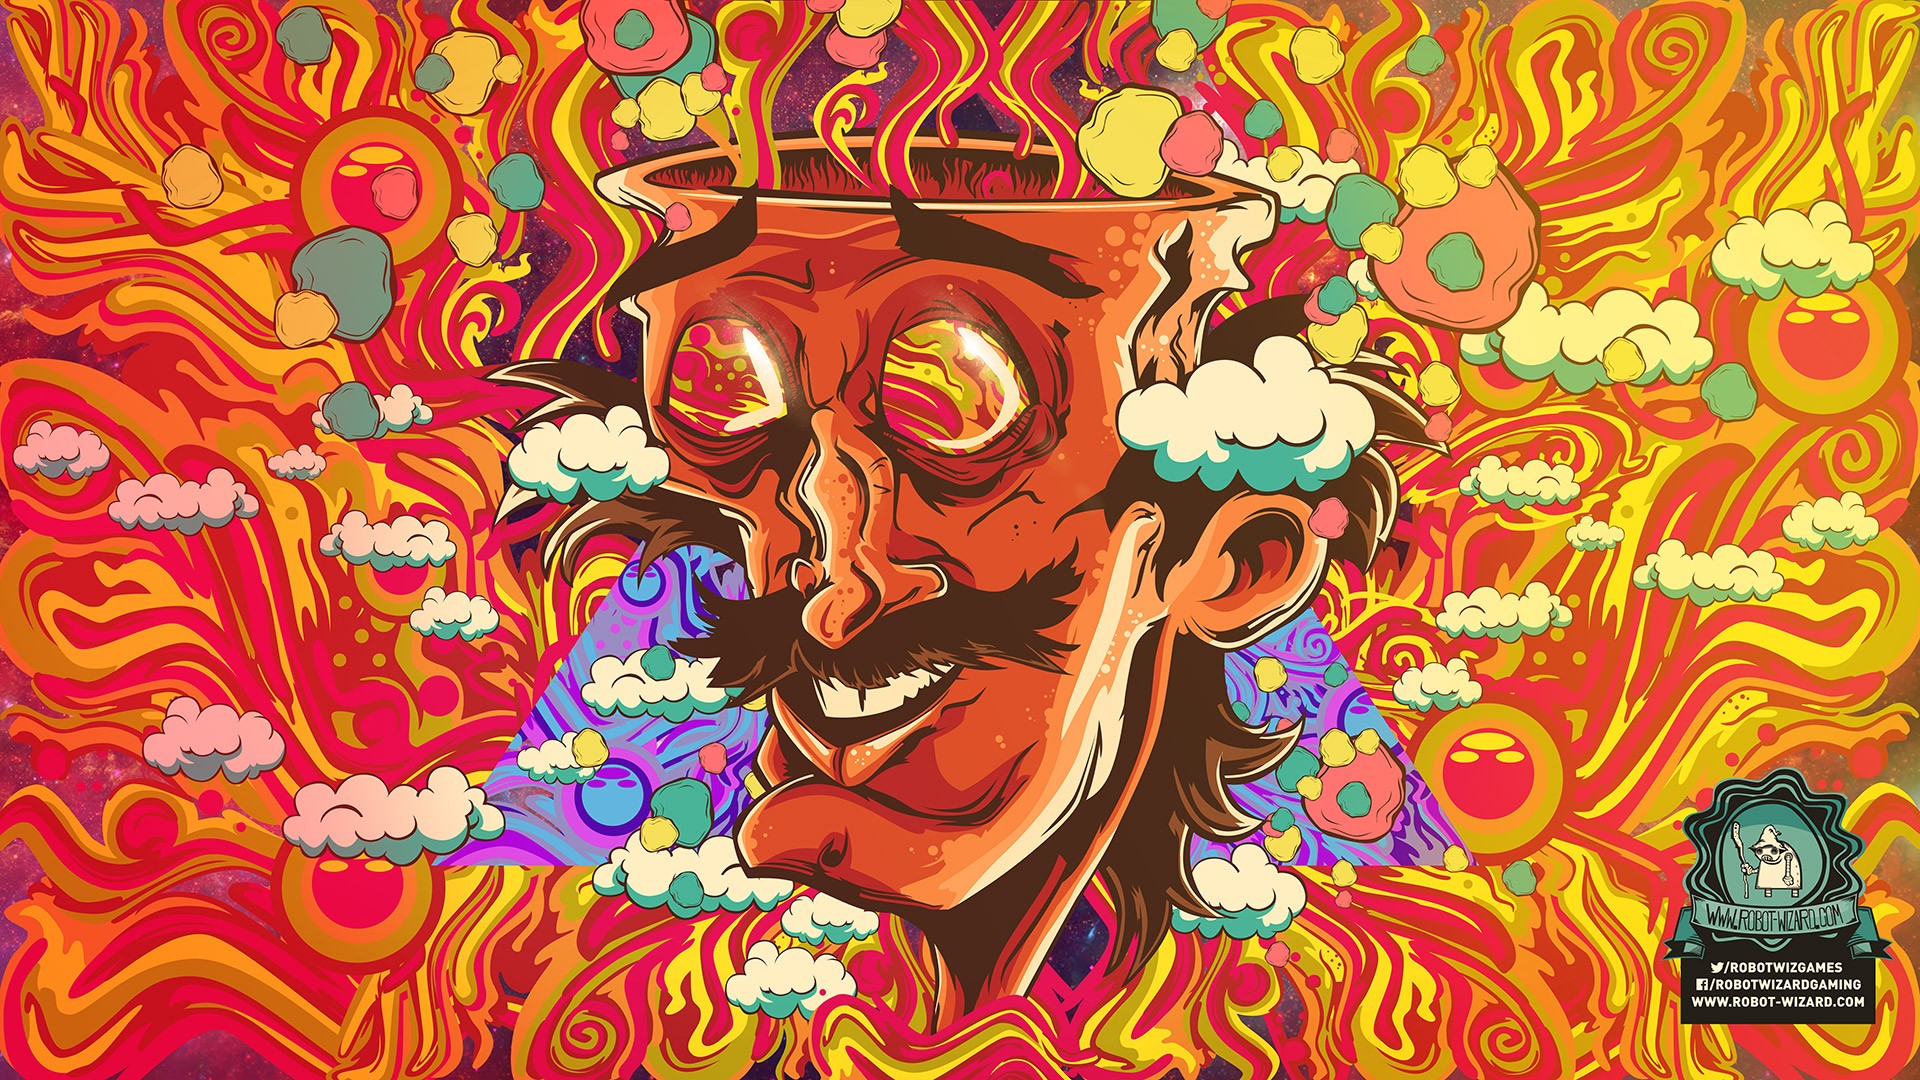 General 1920x1080 Jengo video games colorful LSD surreal artwork red face orange warm colors moustache humor